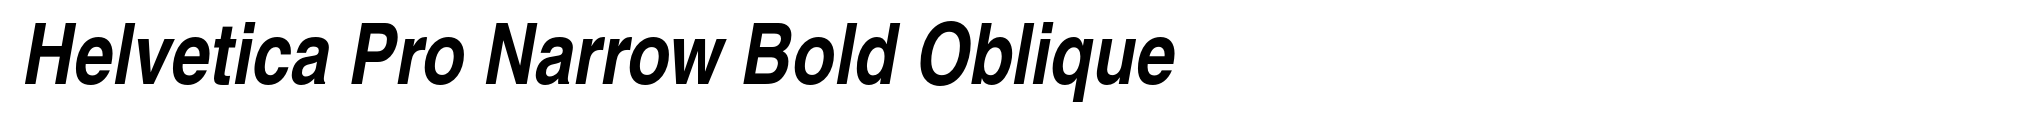 Helvetica Pro Narrow Bold Oblique image